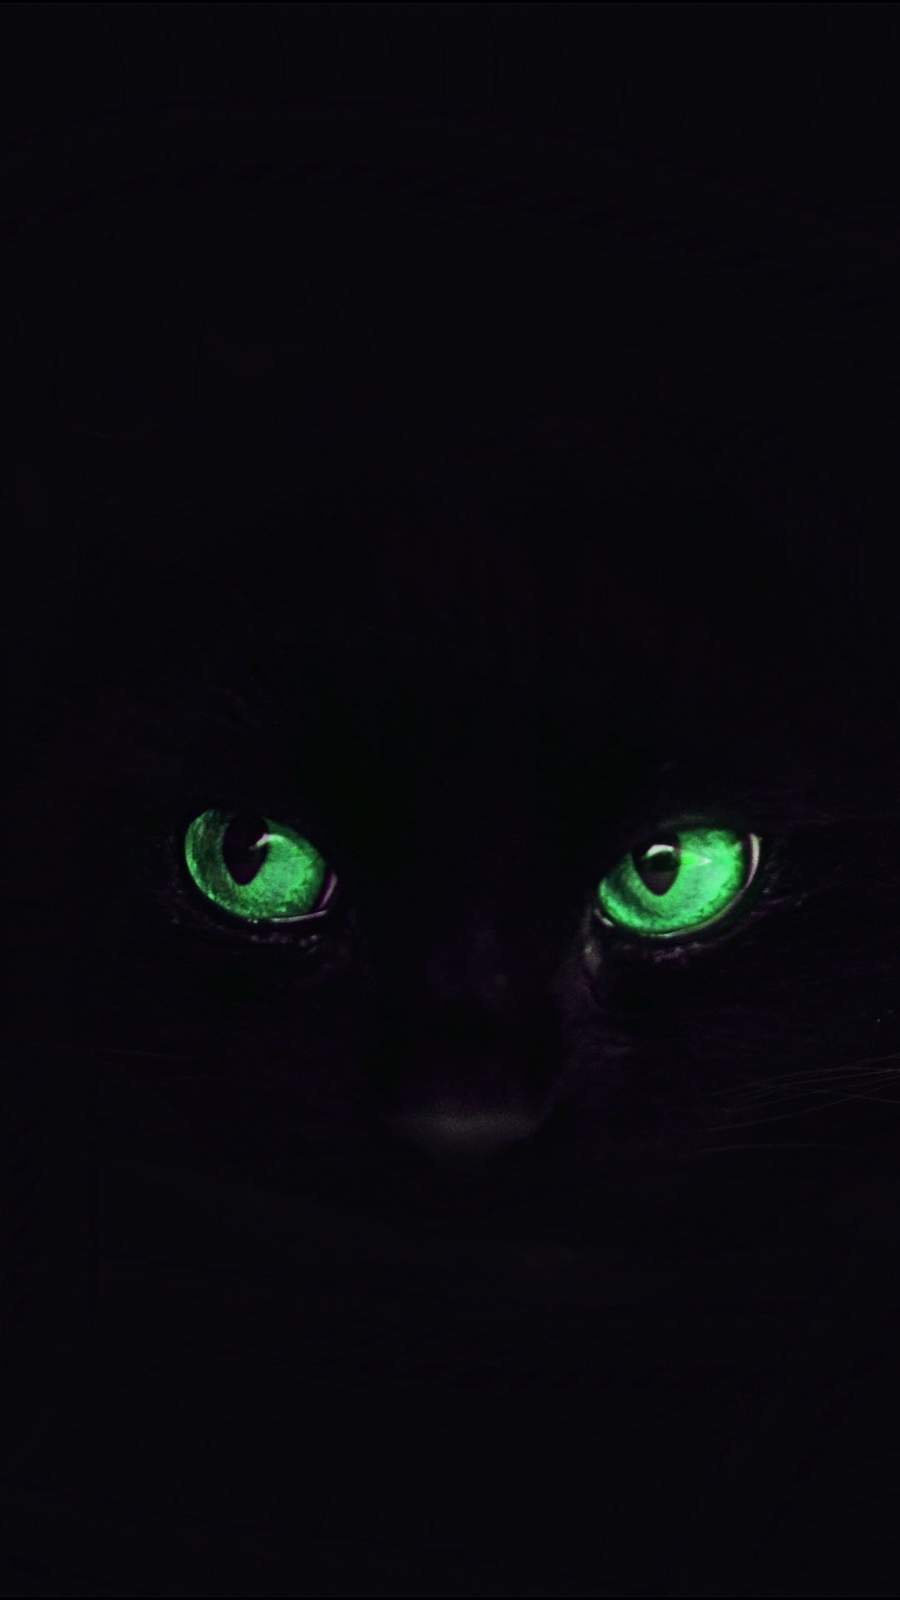 Black Cat Eyes IPhone Wallpaper - IPhone Wallpapers : iPhone Wallpapers